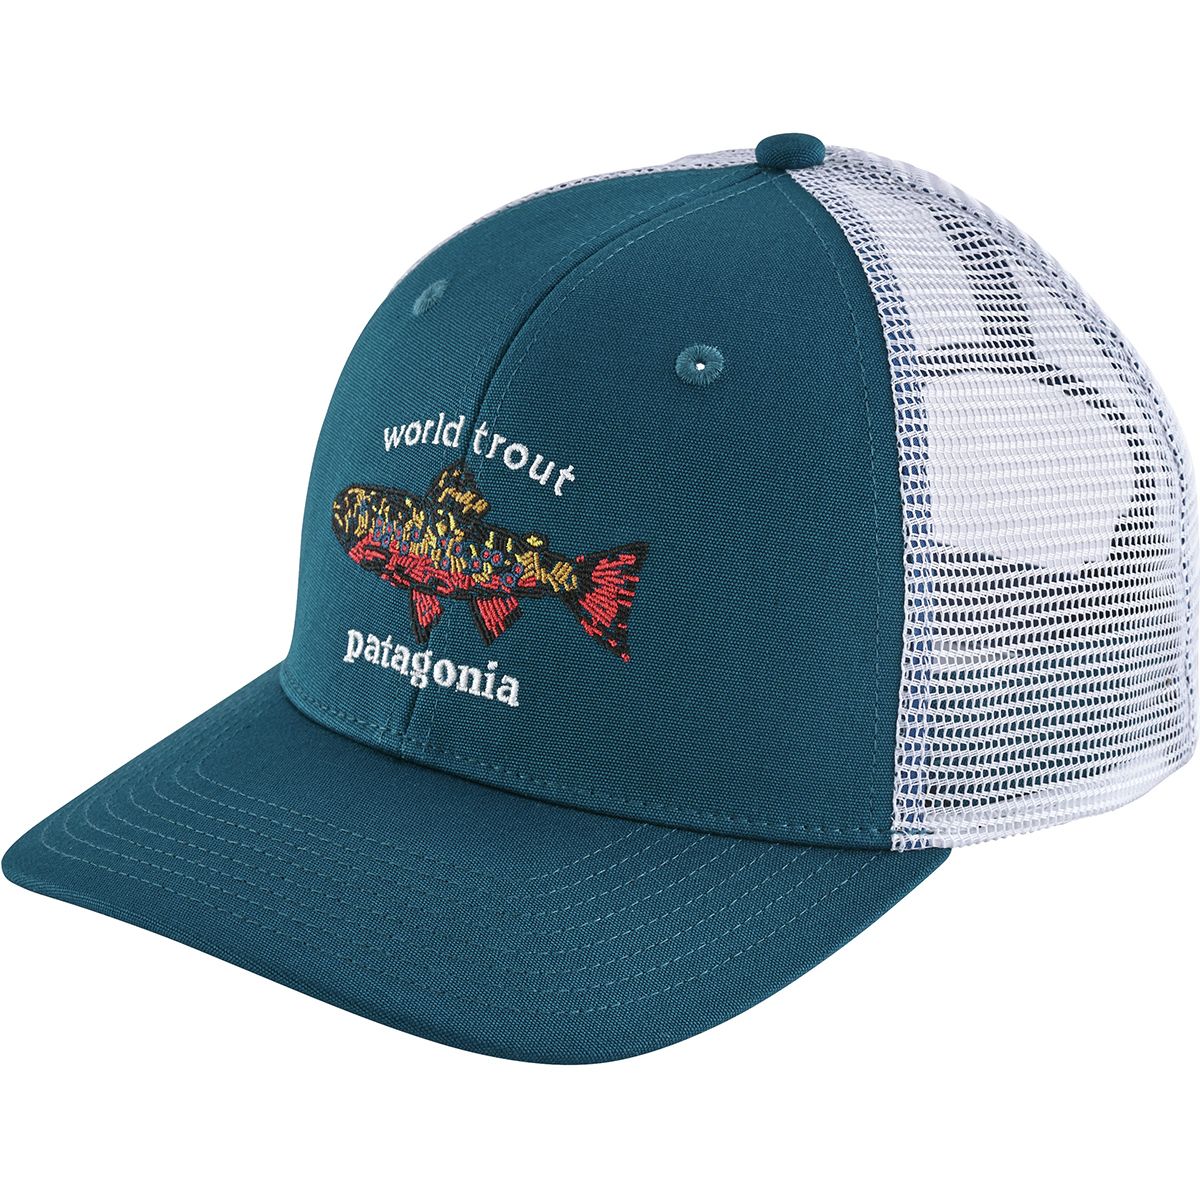 Patagonia World Trout Brook Fishstitch Trucker Hat - Men's - Accessories